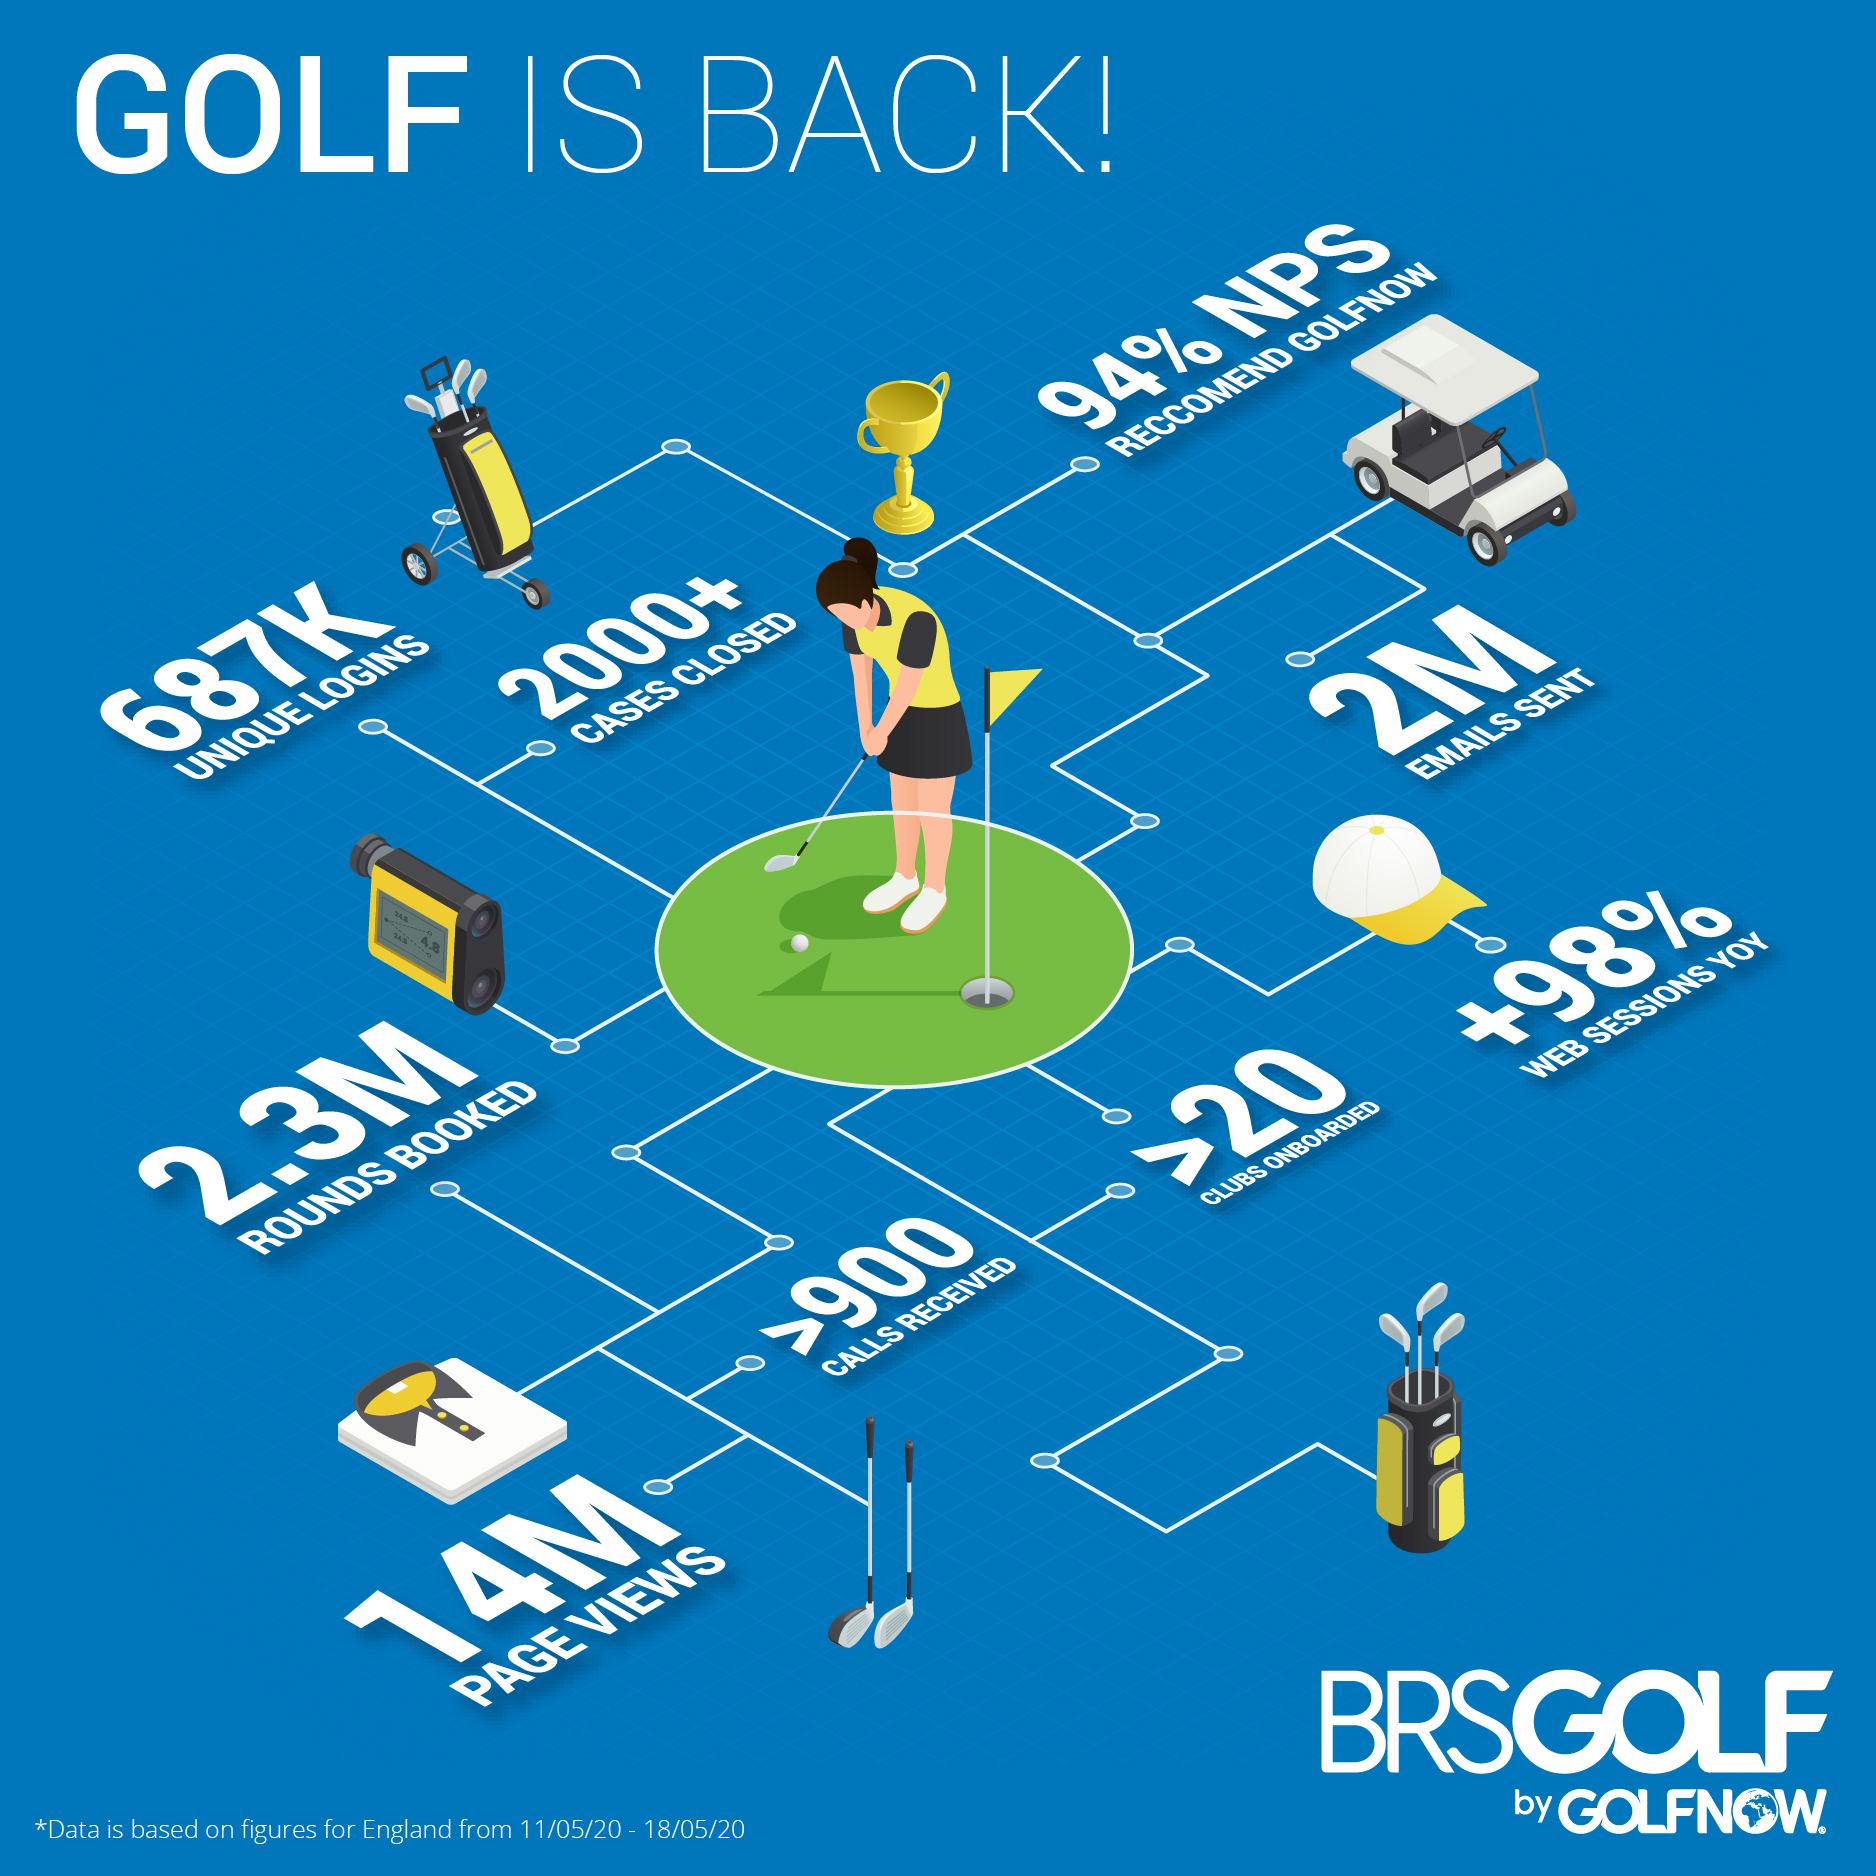 BRSGOLF-golf-is-back-190520-02